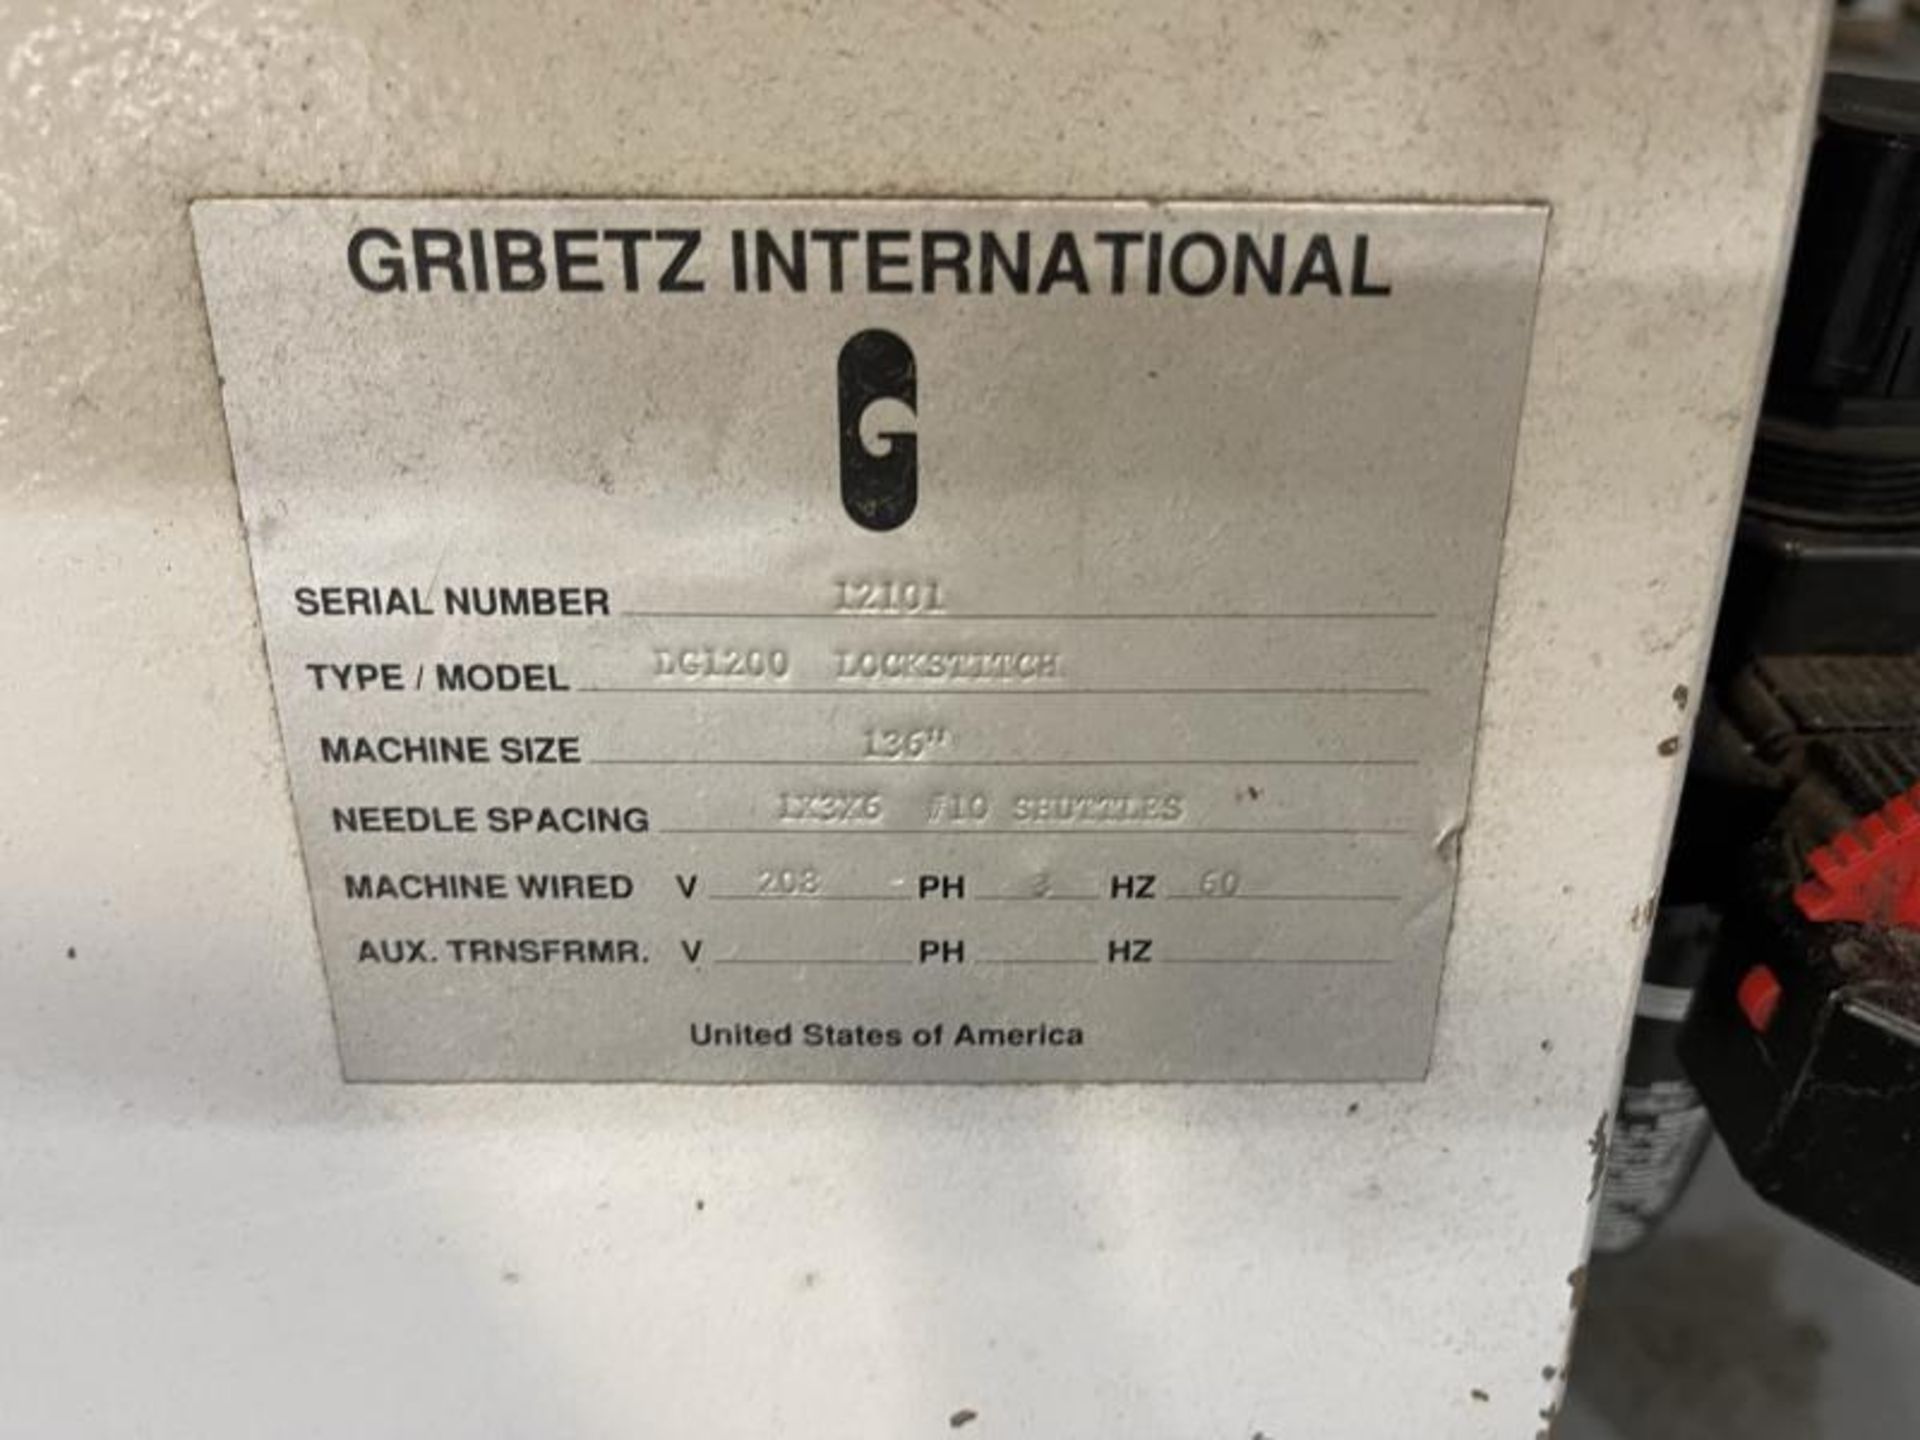 Gribetz Bedspread Quilting Machine 136" Needle Spacing 1x3x6 Shutters #10, M: DG1200 Lockstitch - Image 24 of 25